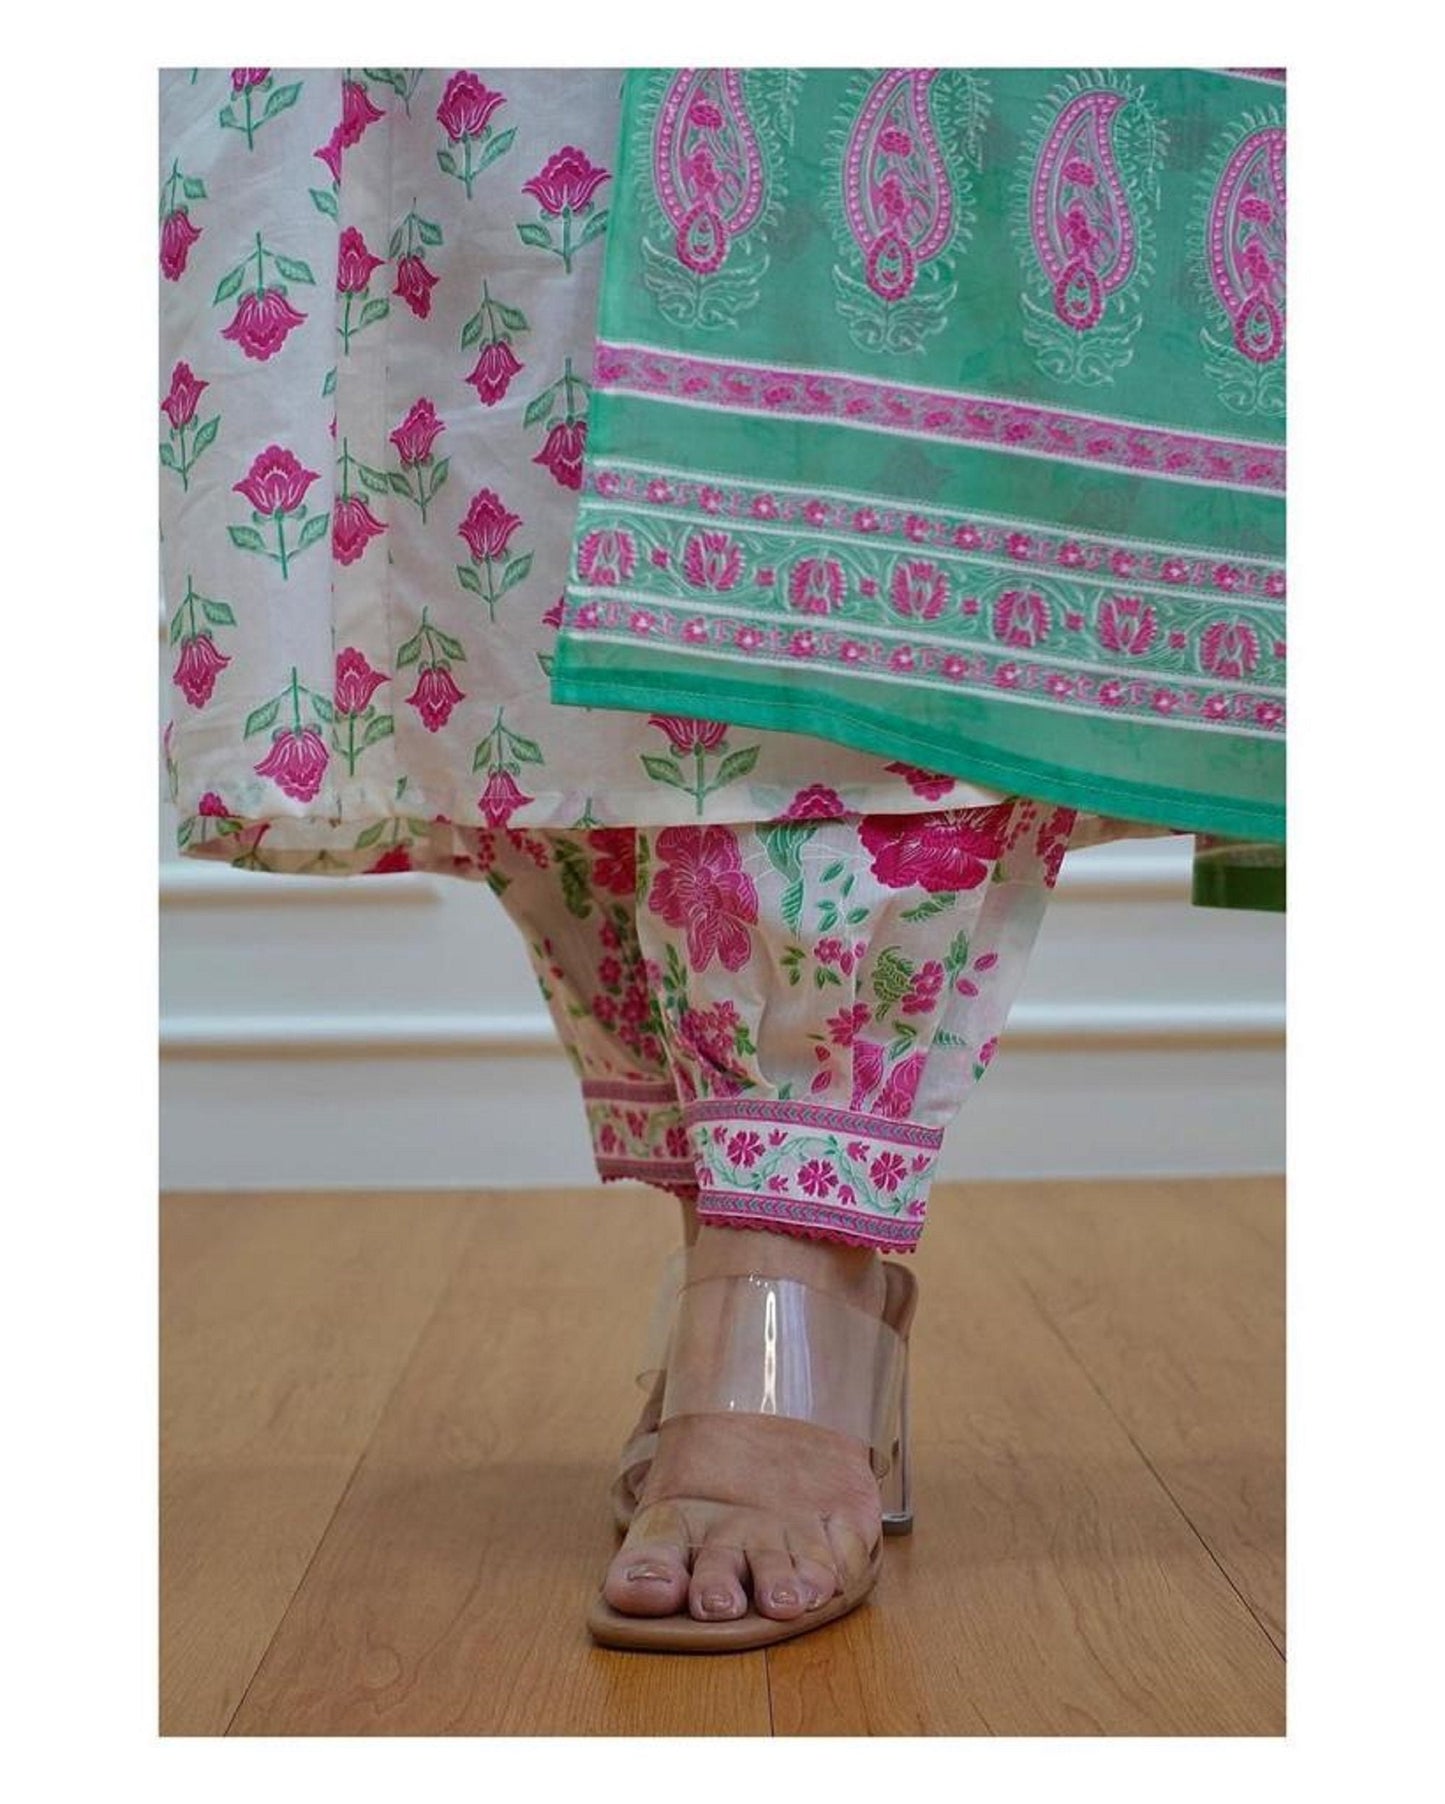 Pakistani 3 Piece Eid Festive Long Flared Kurti Pant with Dupatta Set For Women, Indian Designer Salwar Kameez, Readymade Party/Ethnic Wear